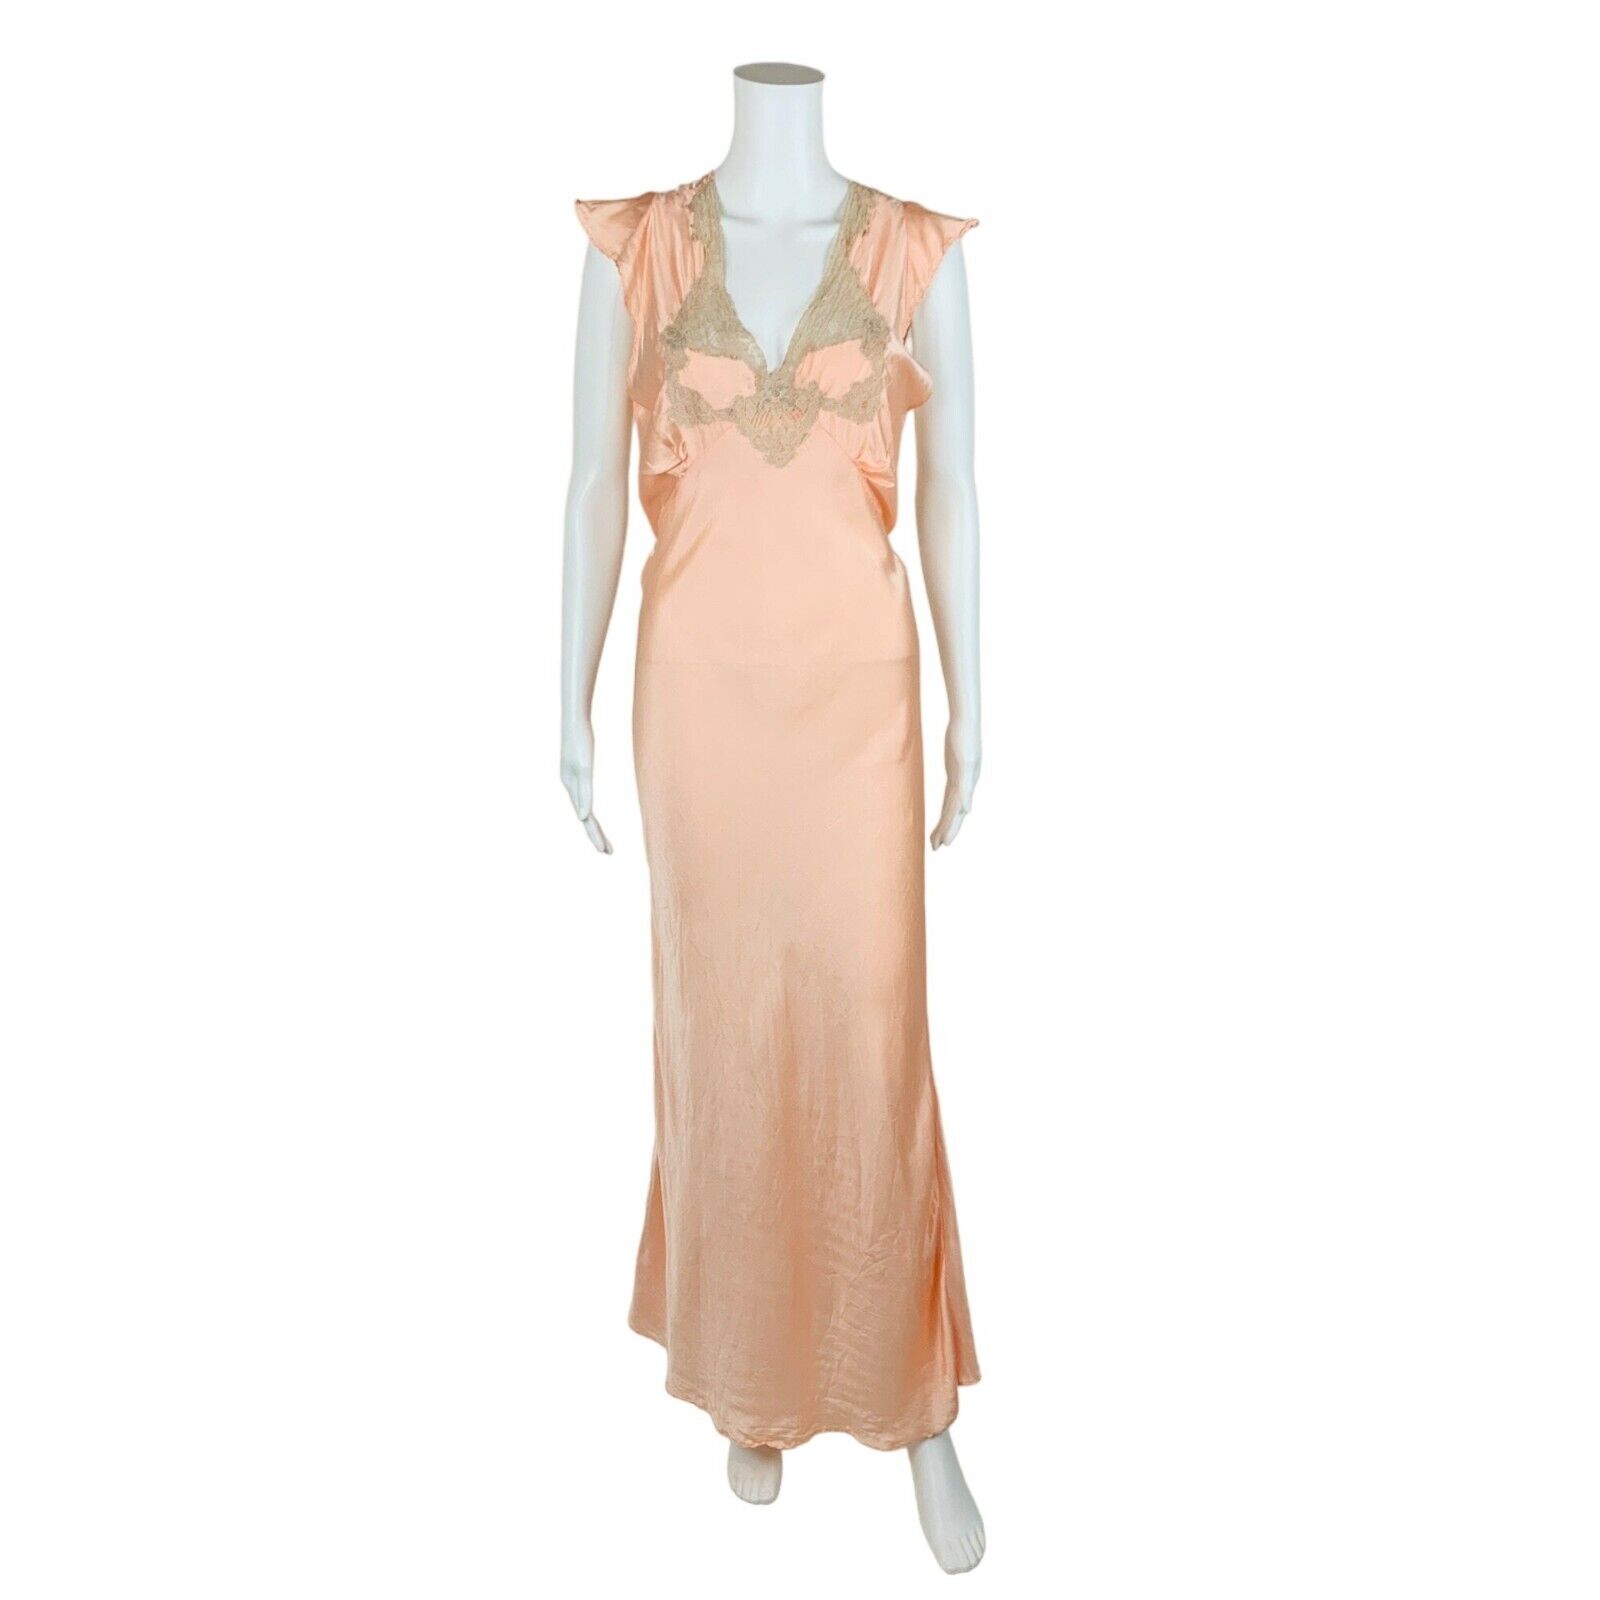 Vintage 30s 40s Nightgown Peach Lace Deep V Dress Lingerie